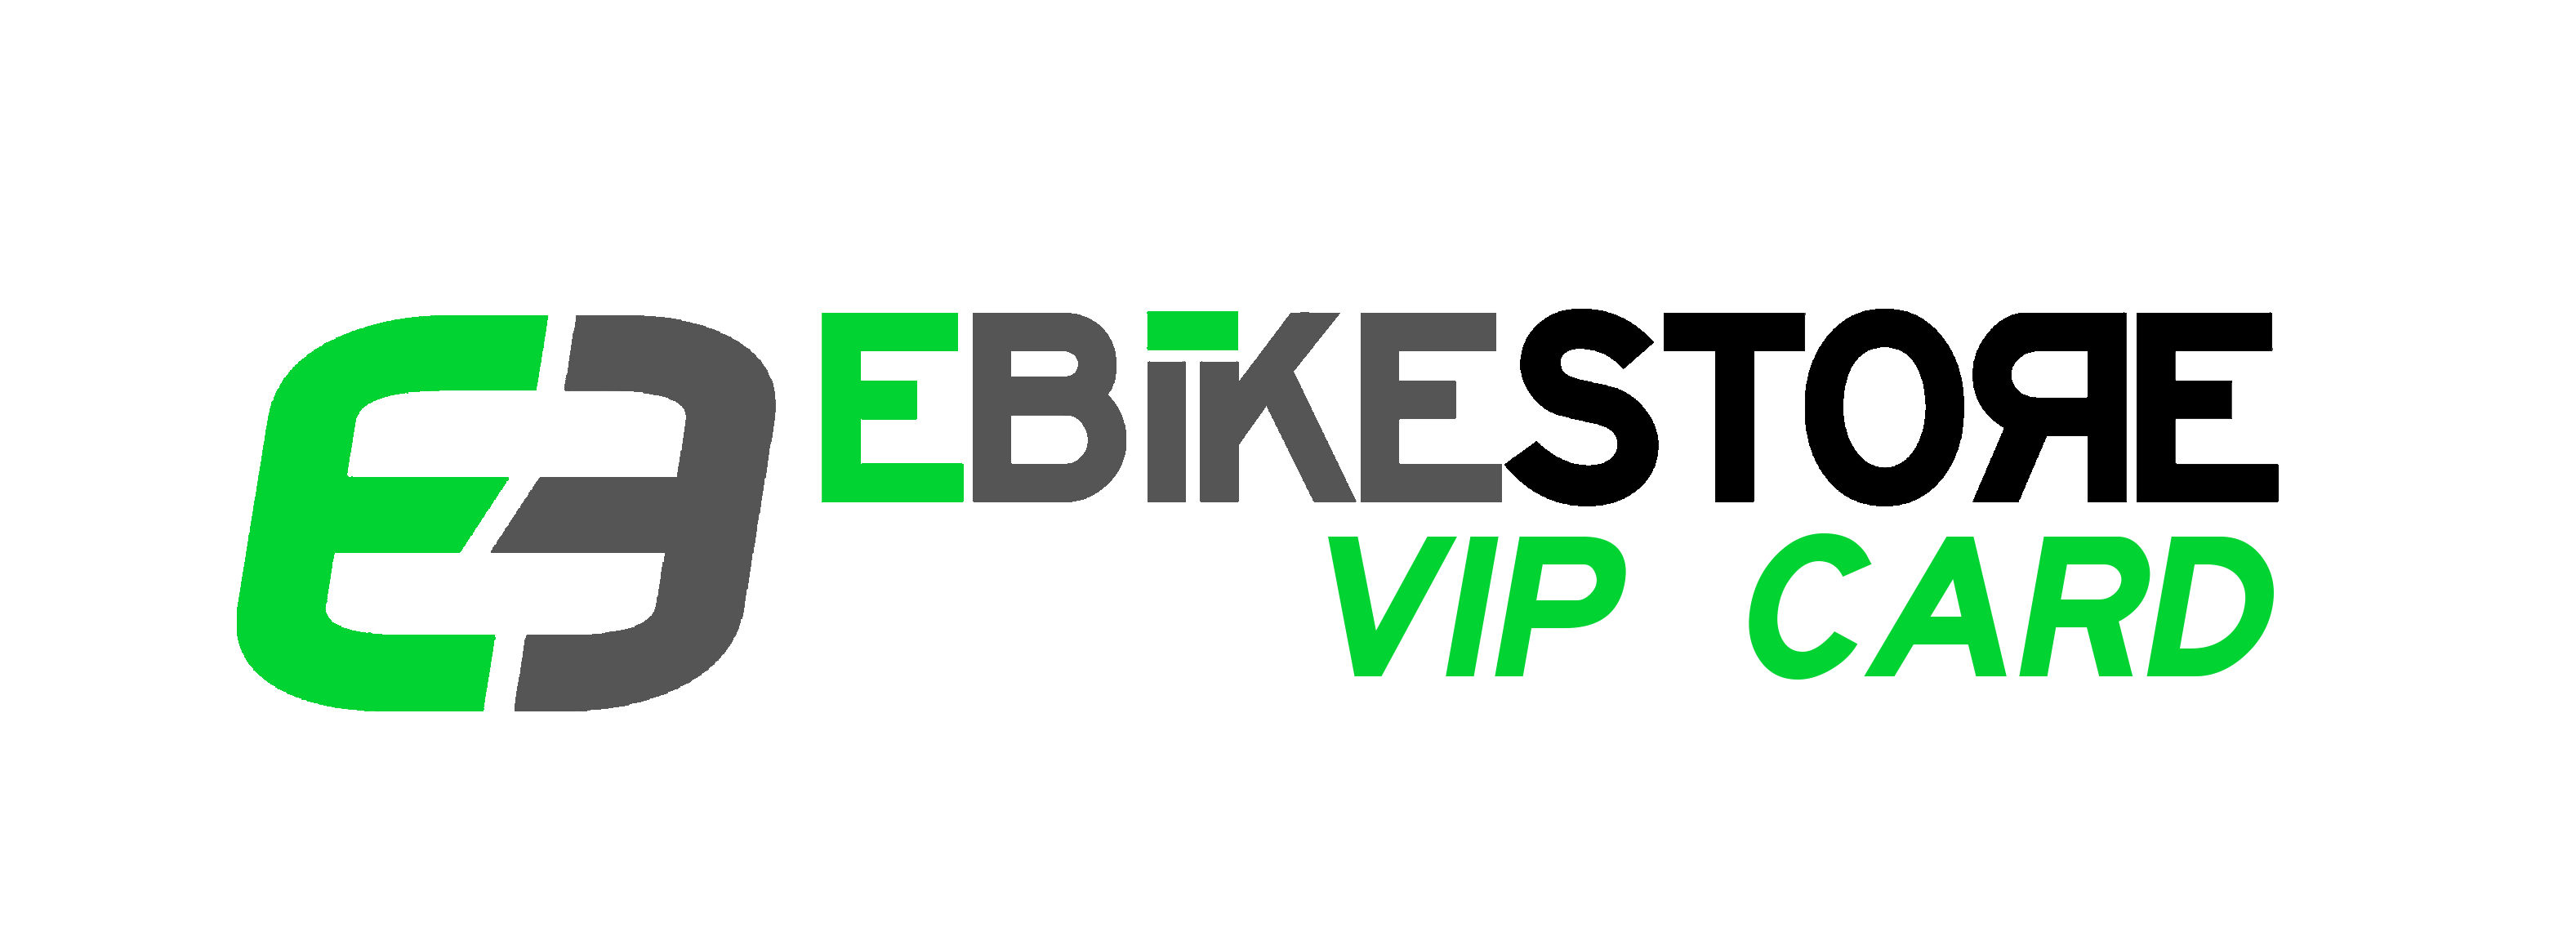 ebike-store-VIP CARD_blk